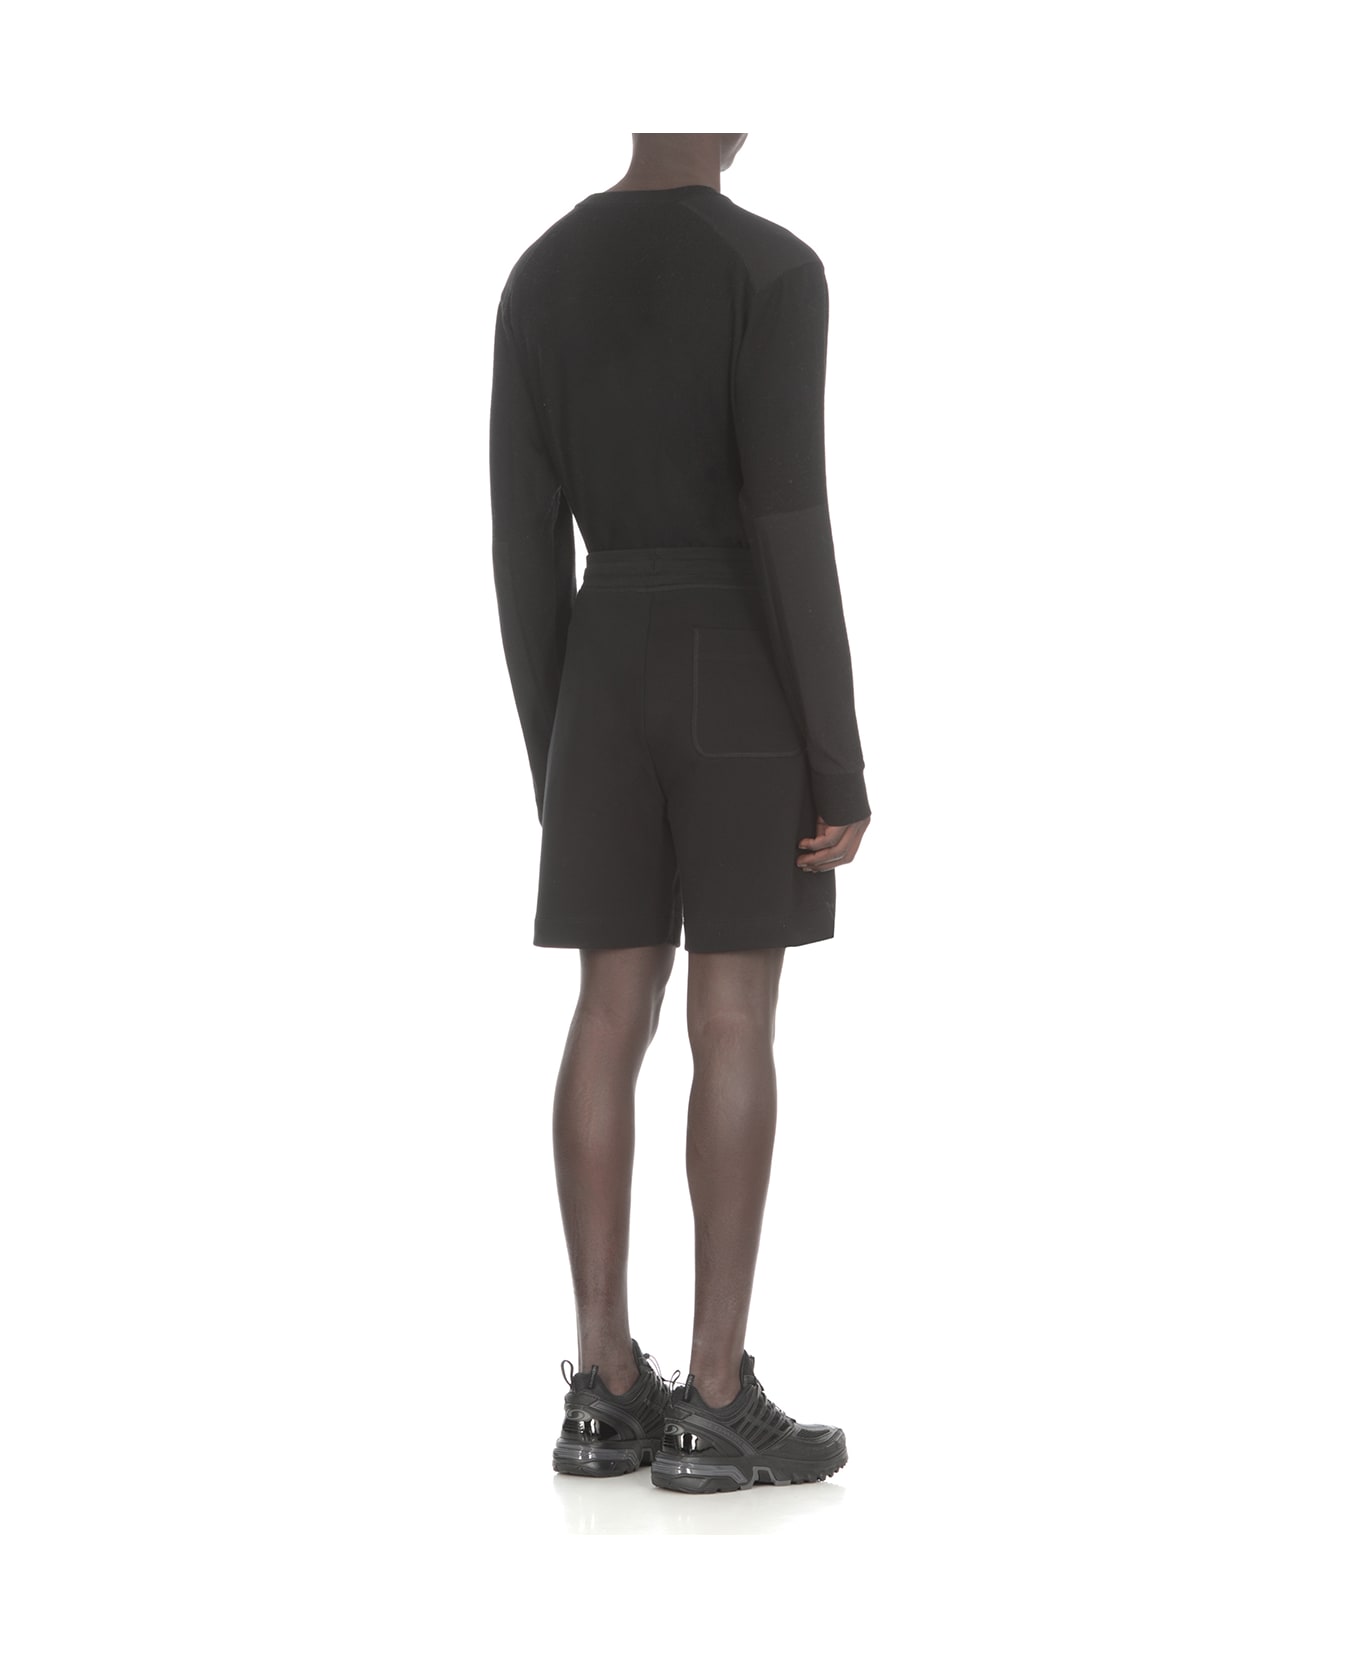 Canada Goose Huron Shorts - Black